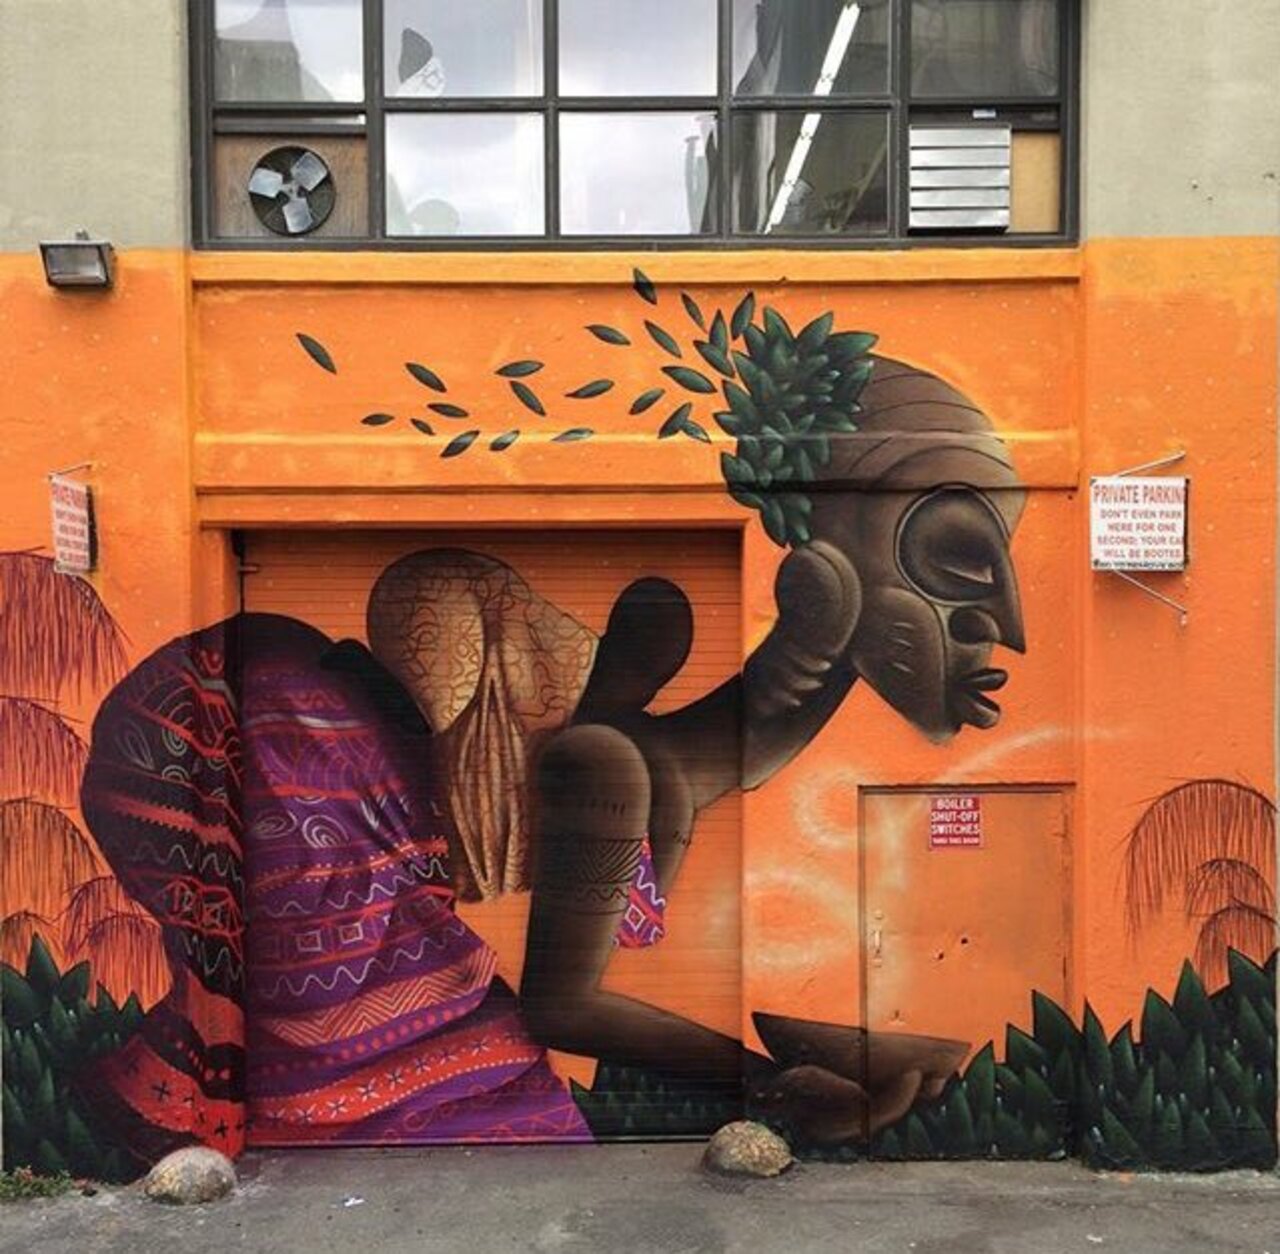 New Street Art by Alexandre Keto in NYC 

#art #graffiti #mural #streetart https://t.co/Tb1Ry85tUS